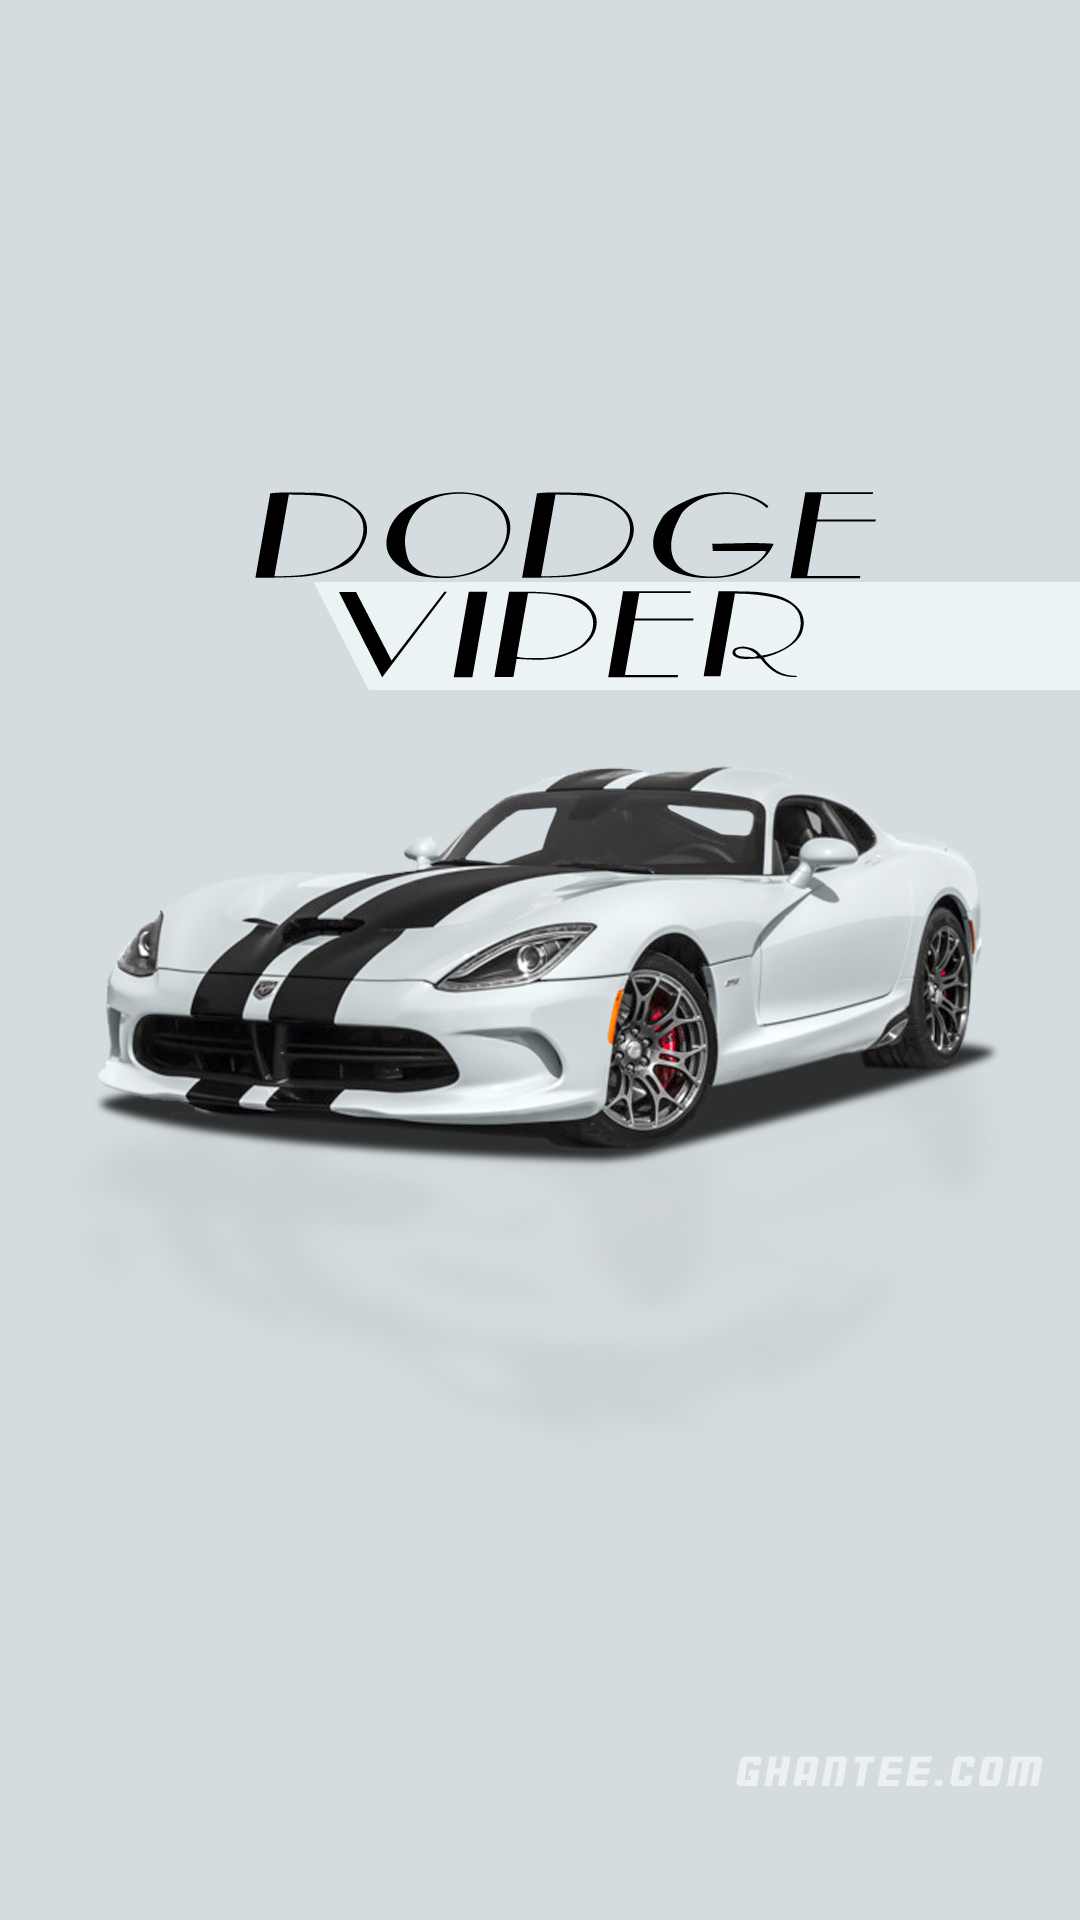 Dodge Viper Phone Wallpaper Free Dodge Viper Phone Background